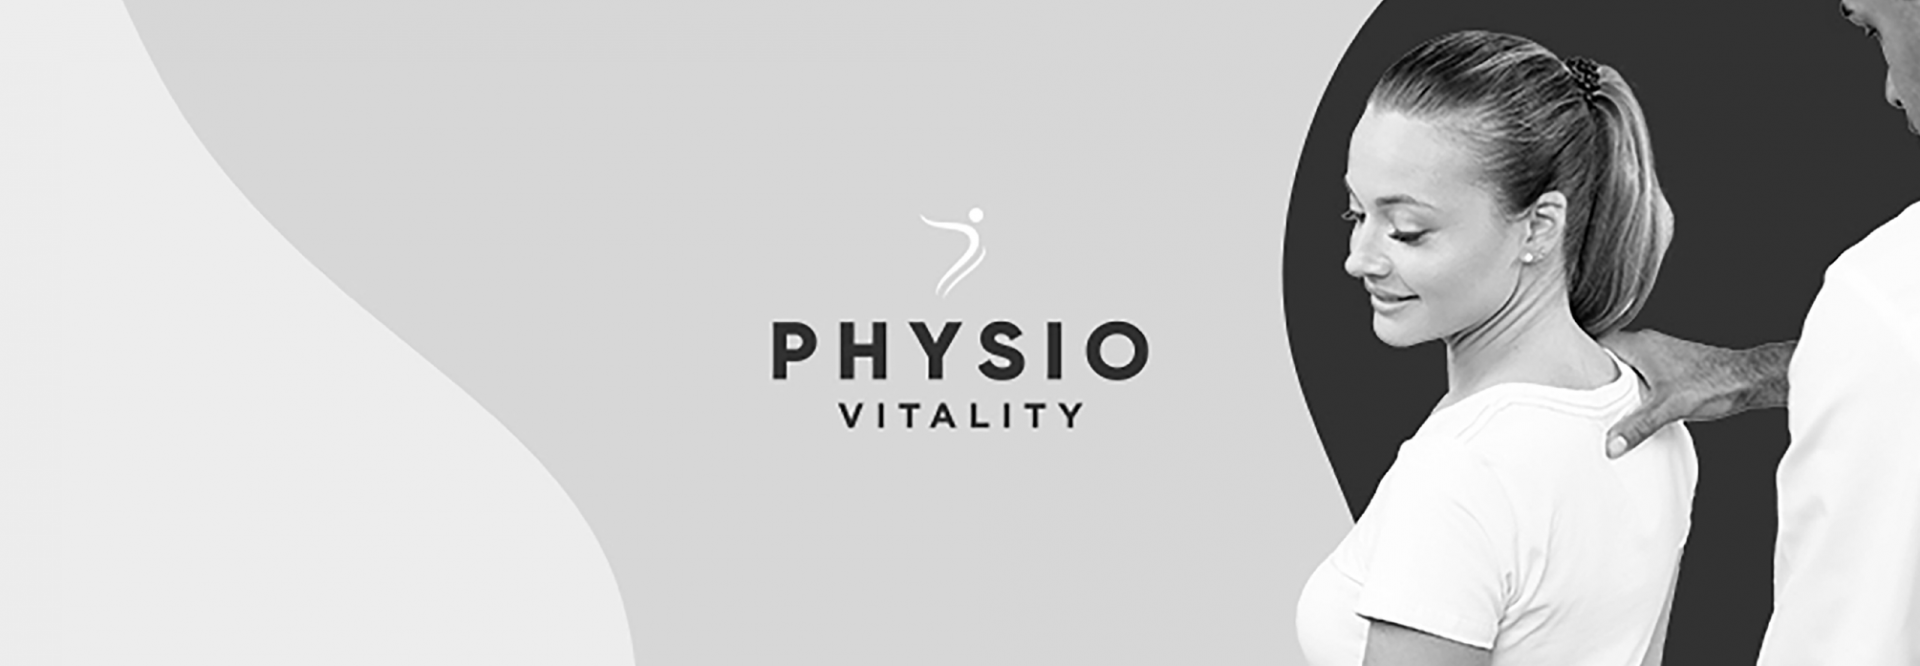 Physio-Vitality